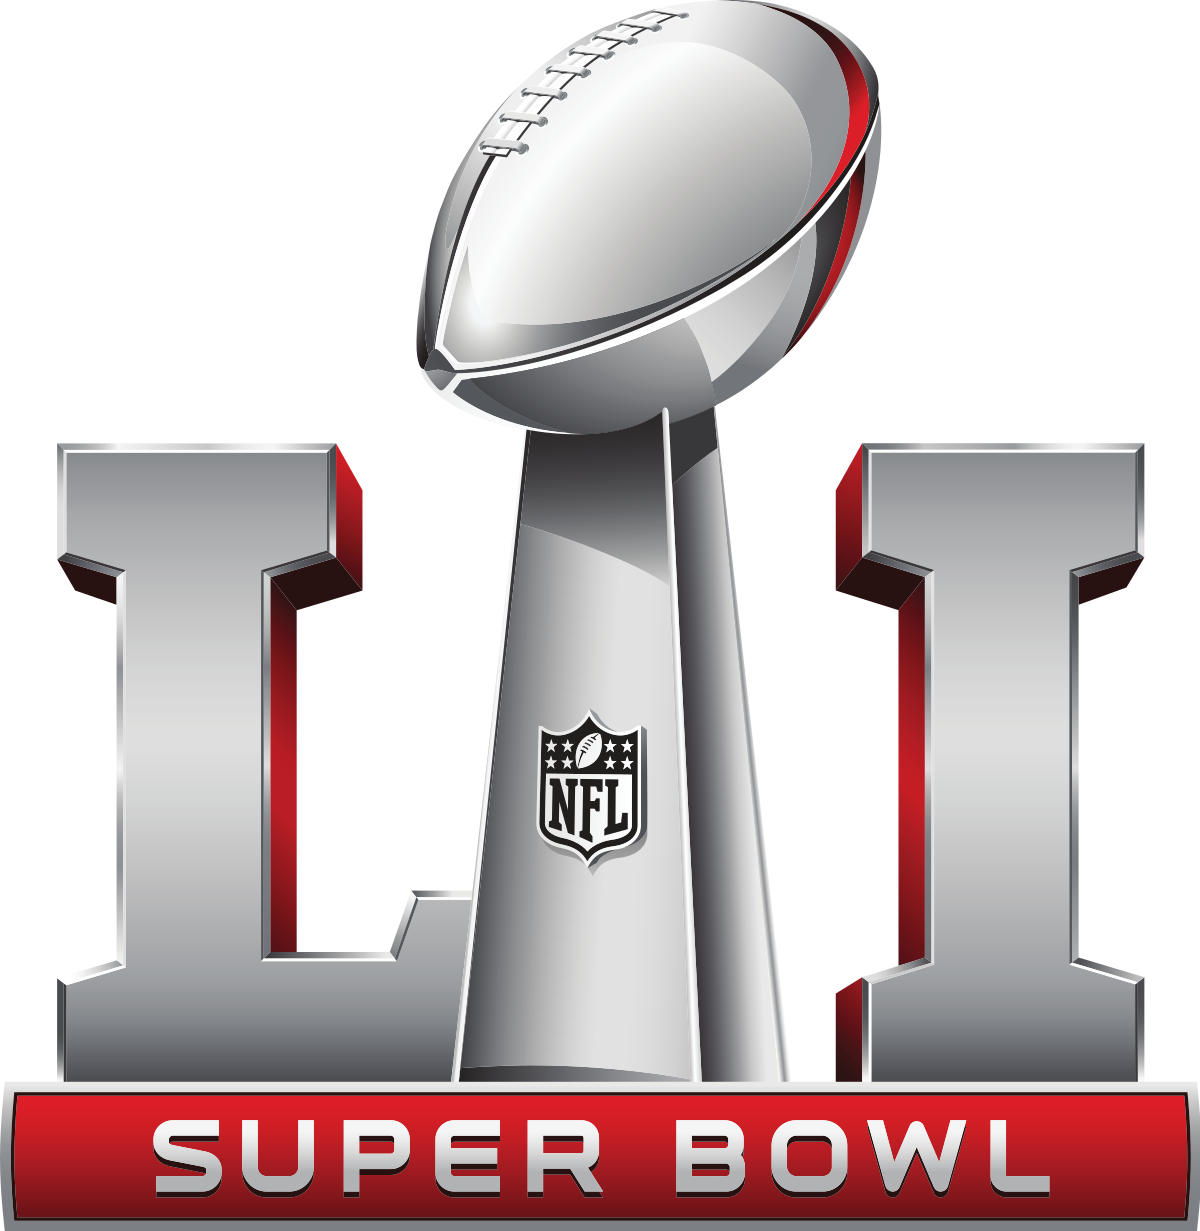 Super Bowl XLII - Wikipedia